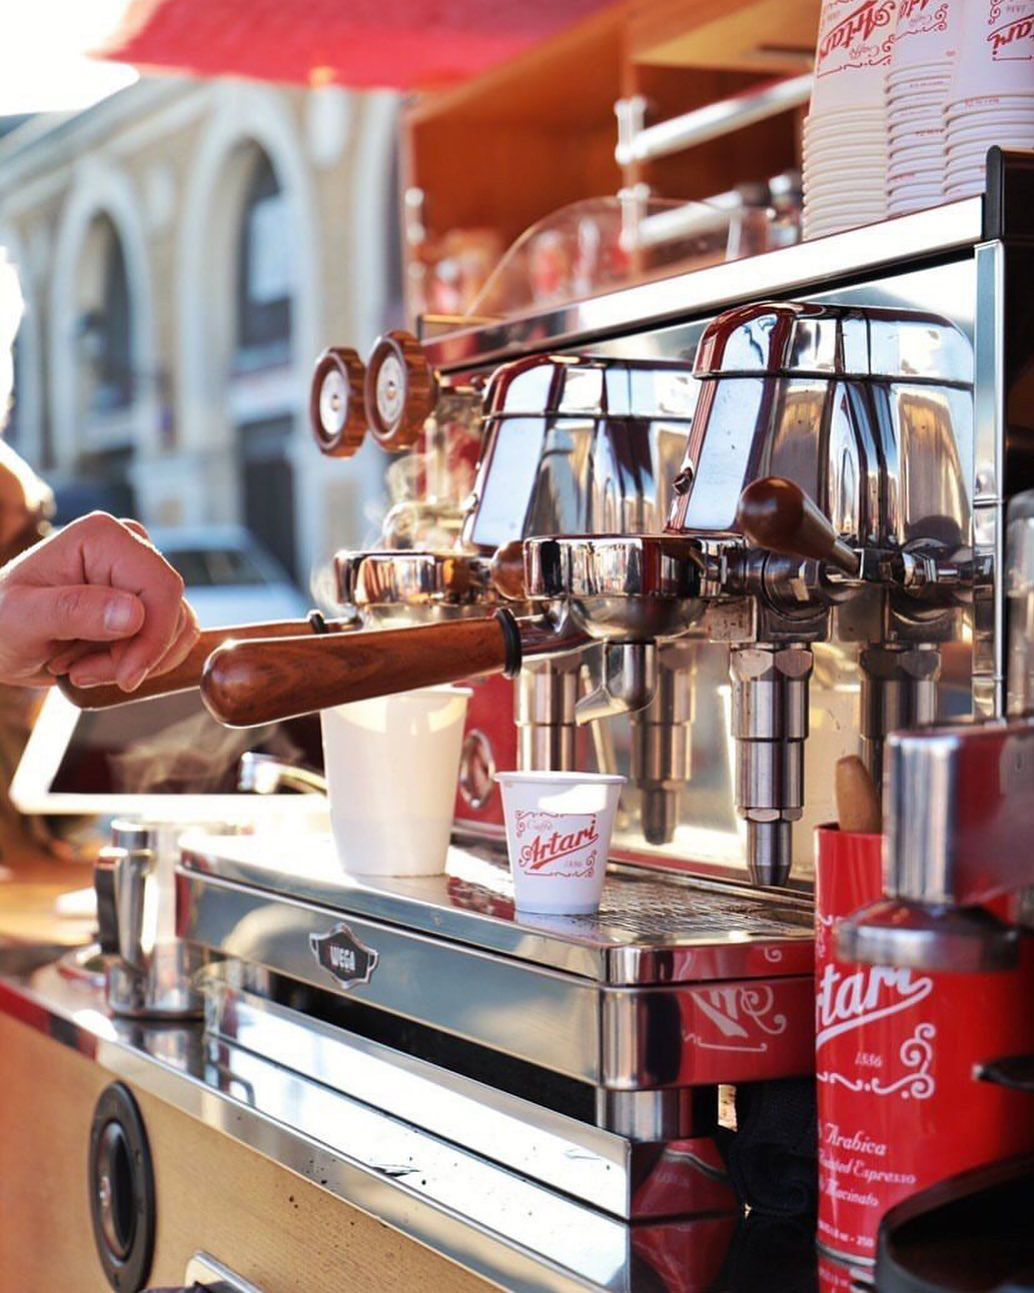 artari coffee break in paris, a mobile coffee shop with coffee machine